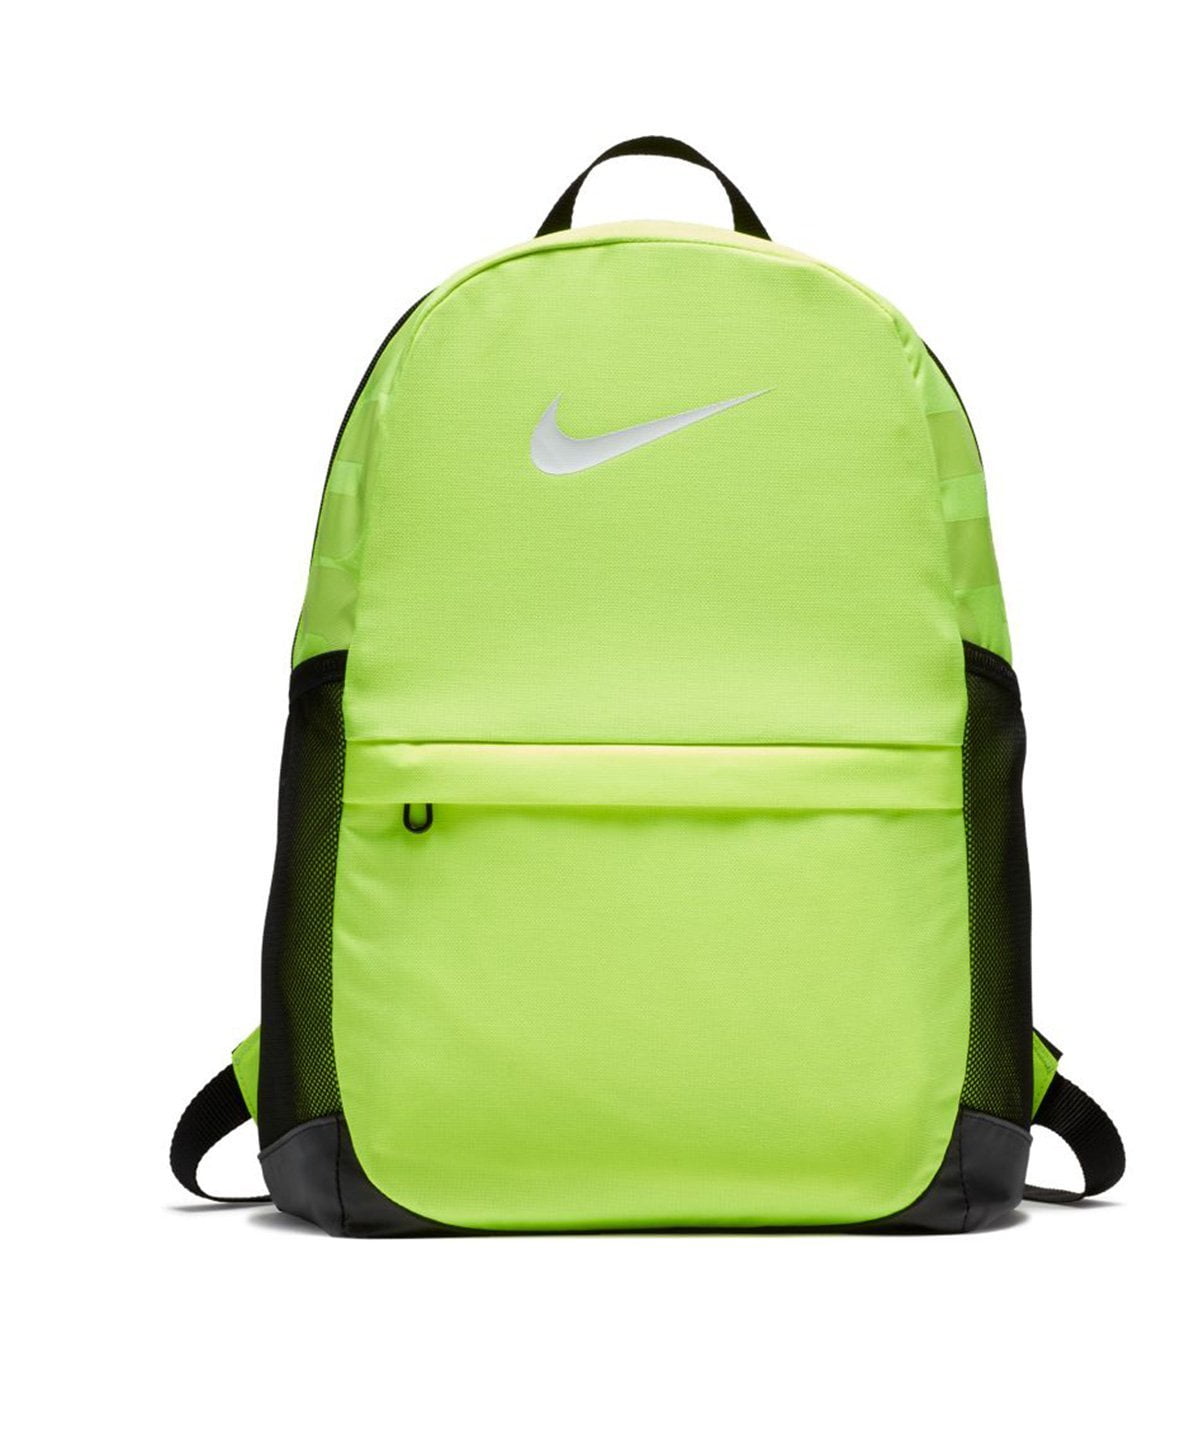 Nike Brasilia Training Backpack School Bag, Volt/Black-White - Walmart.com